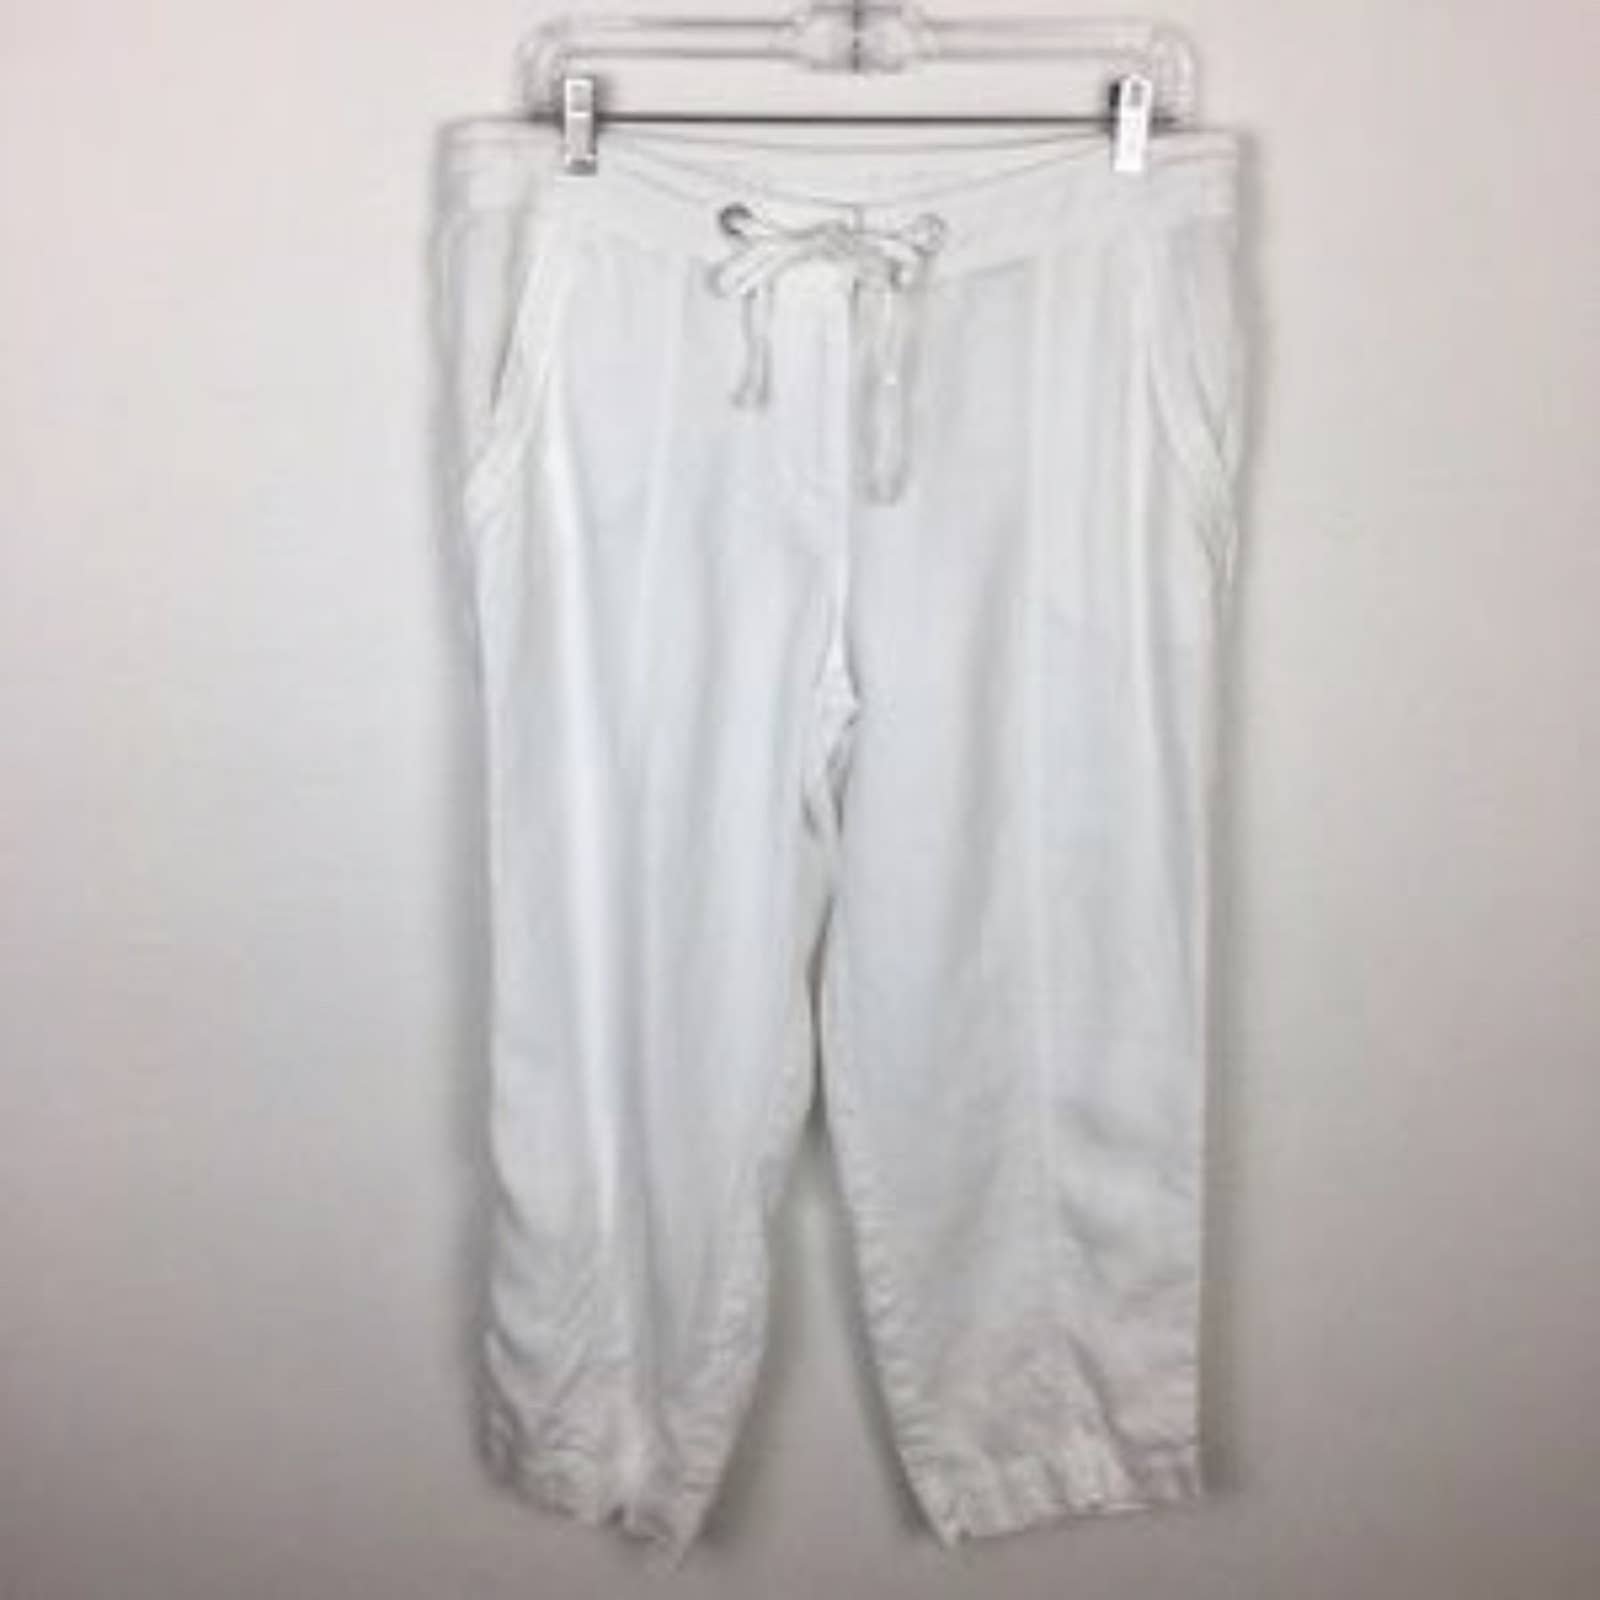 Popular Tommy Bahama White Linen Crop Pants size 10 LfI